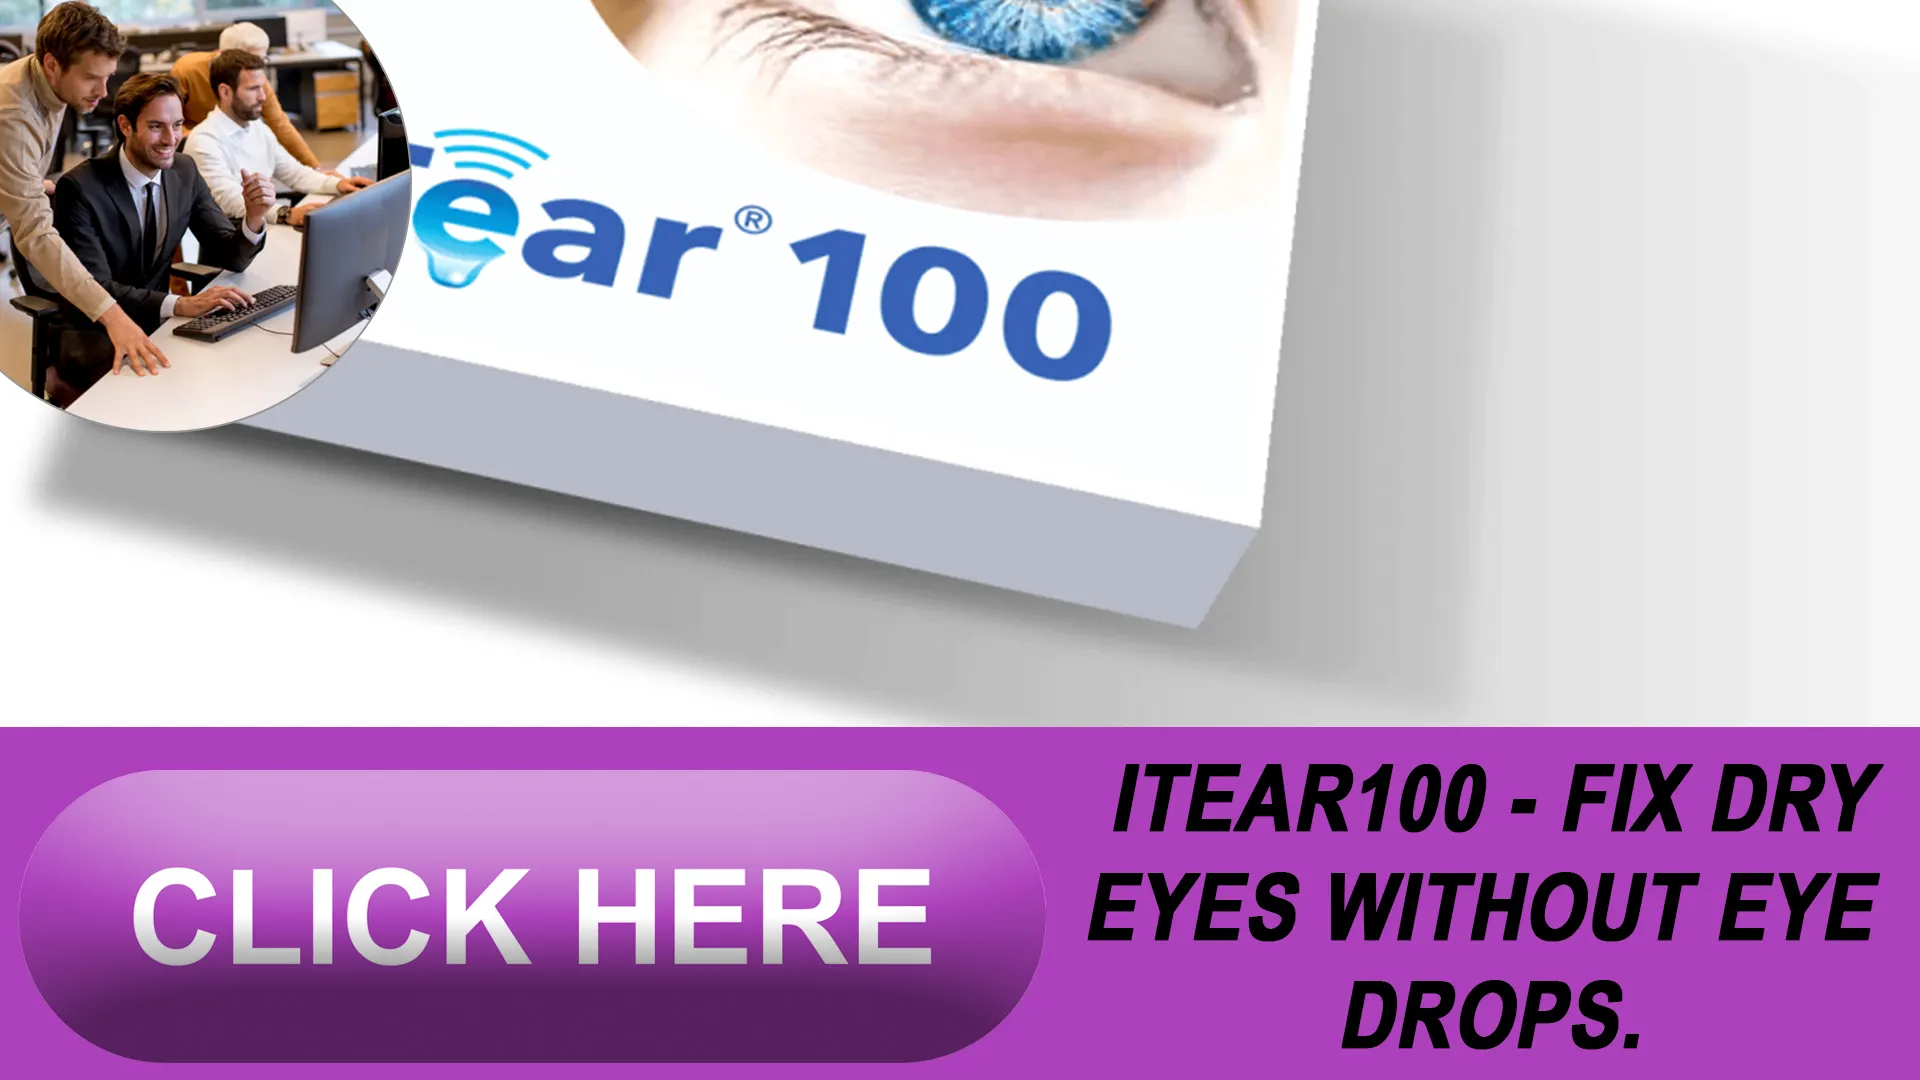 Understanding the iTEAR100 Device